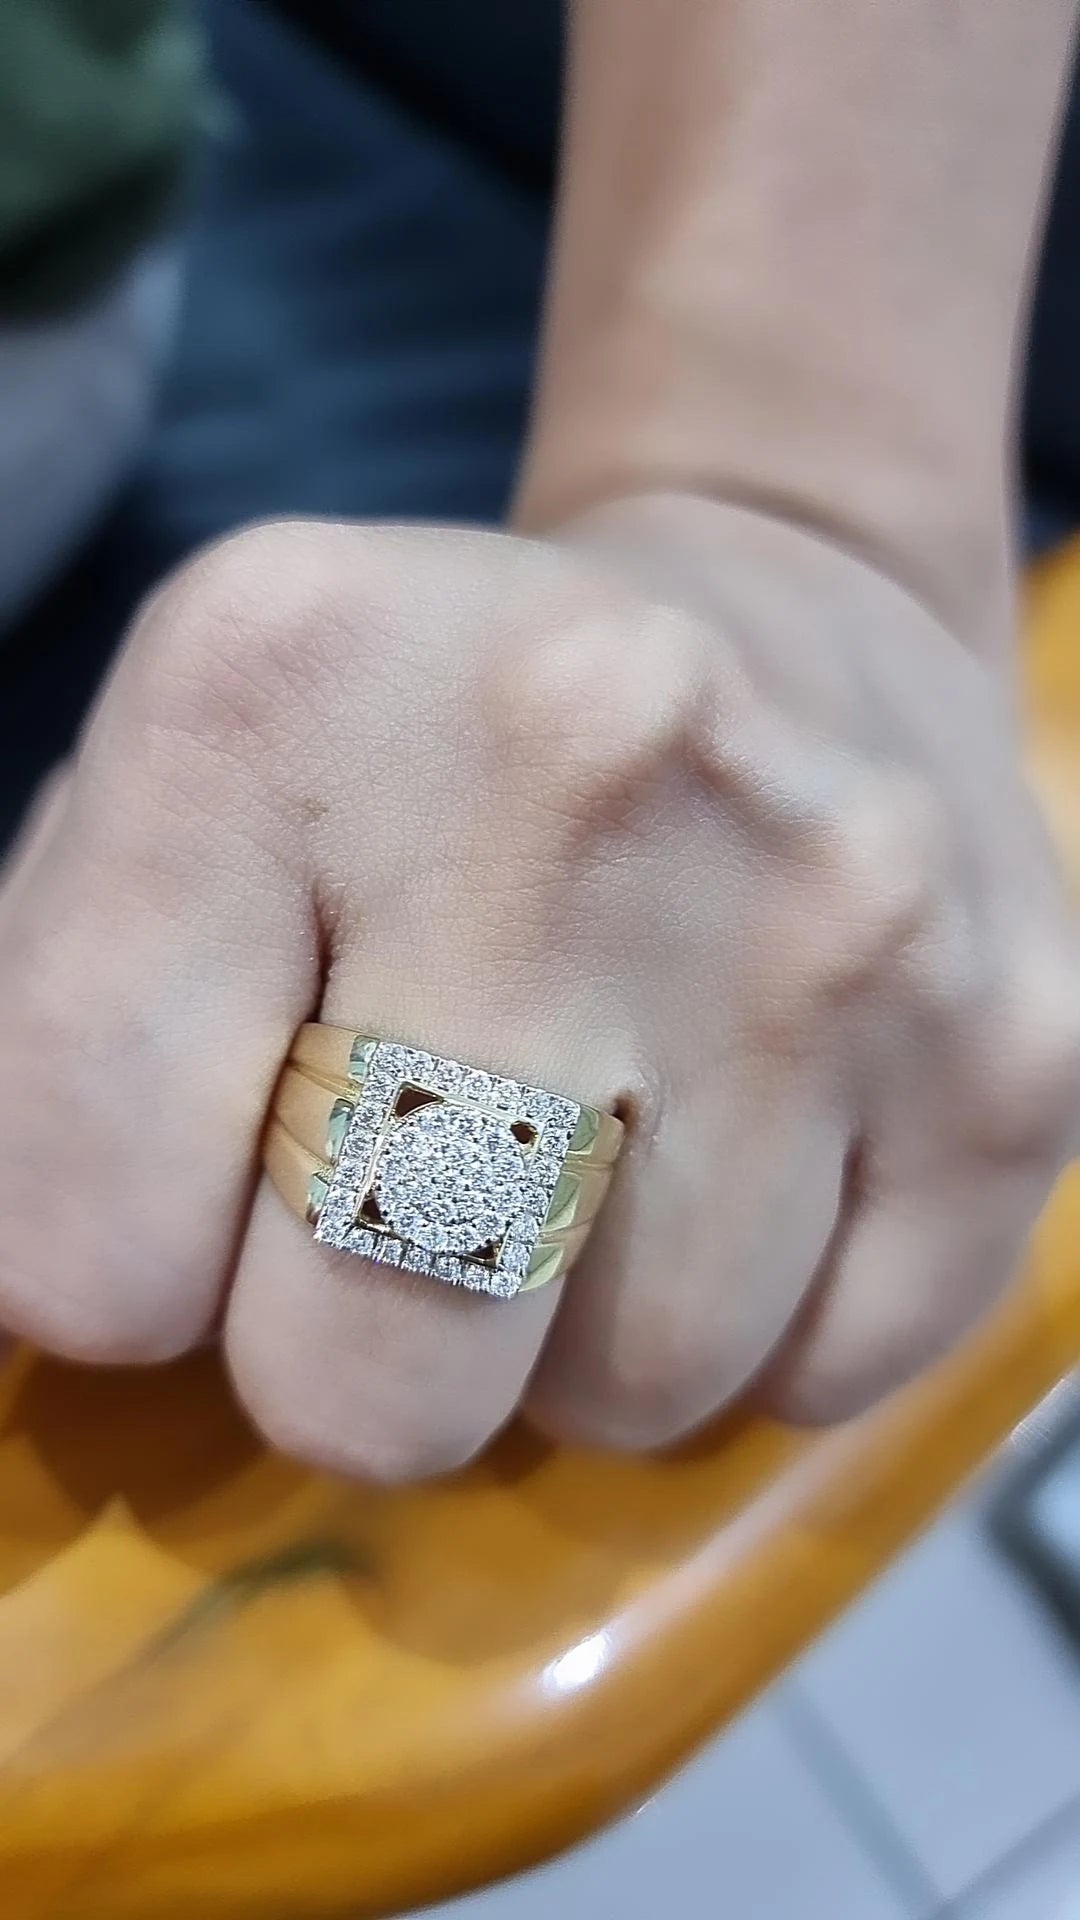 Men's Diamond Ring In 18k Yellow Gold.